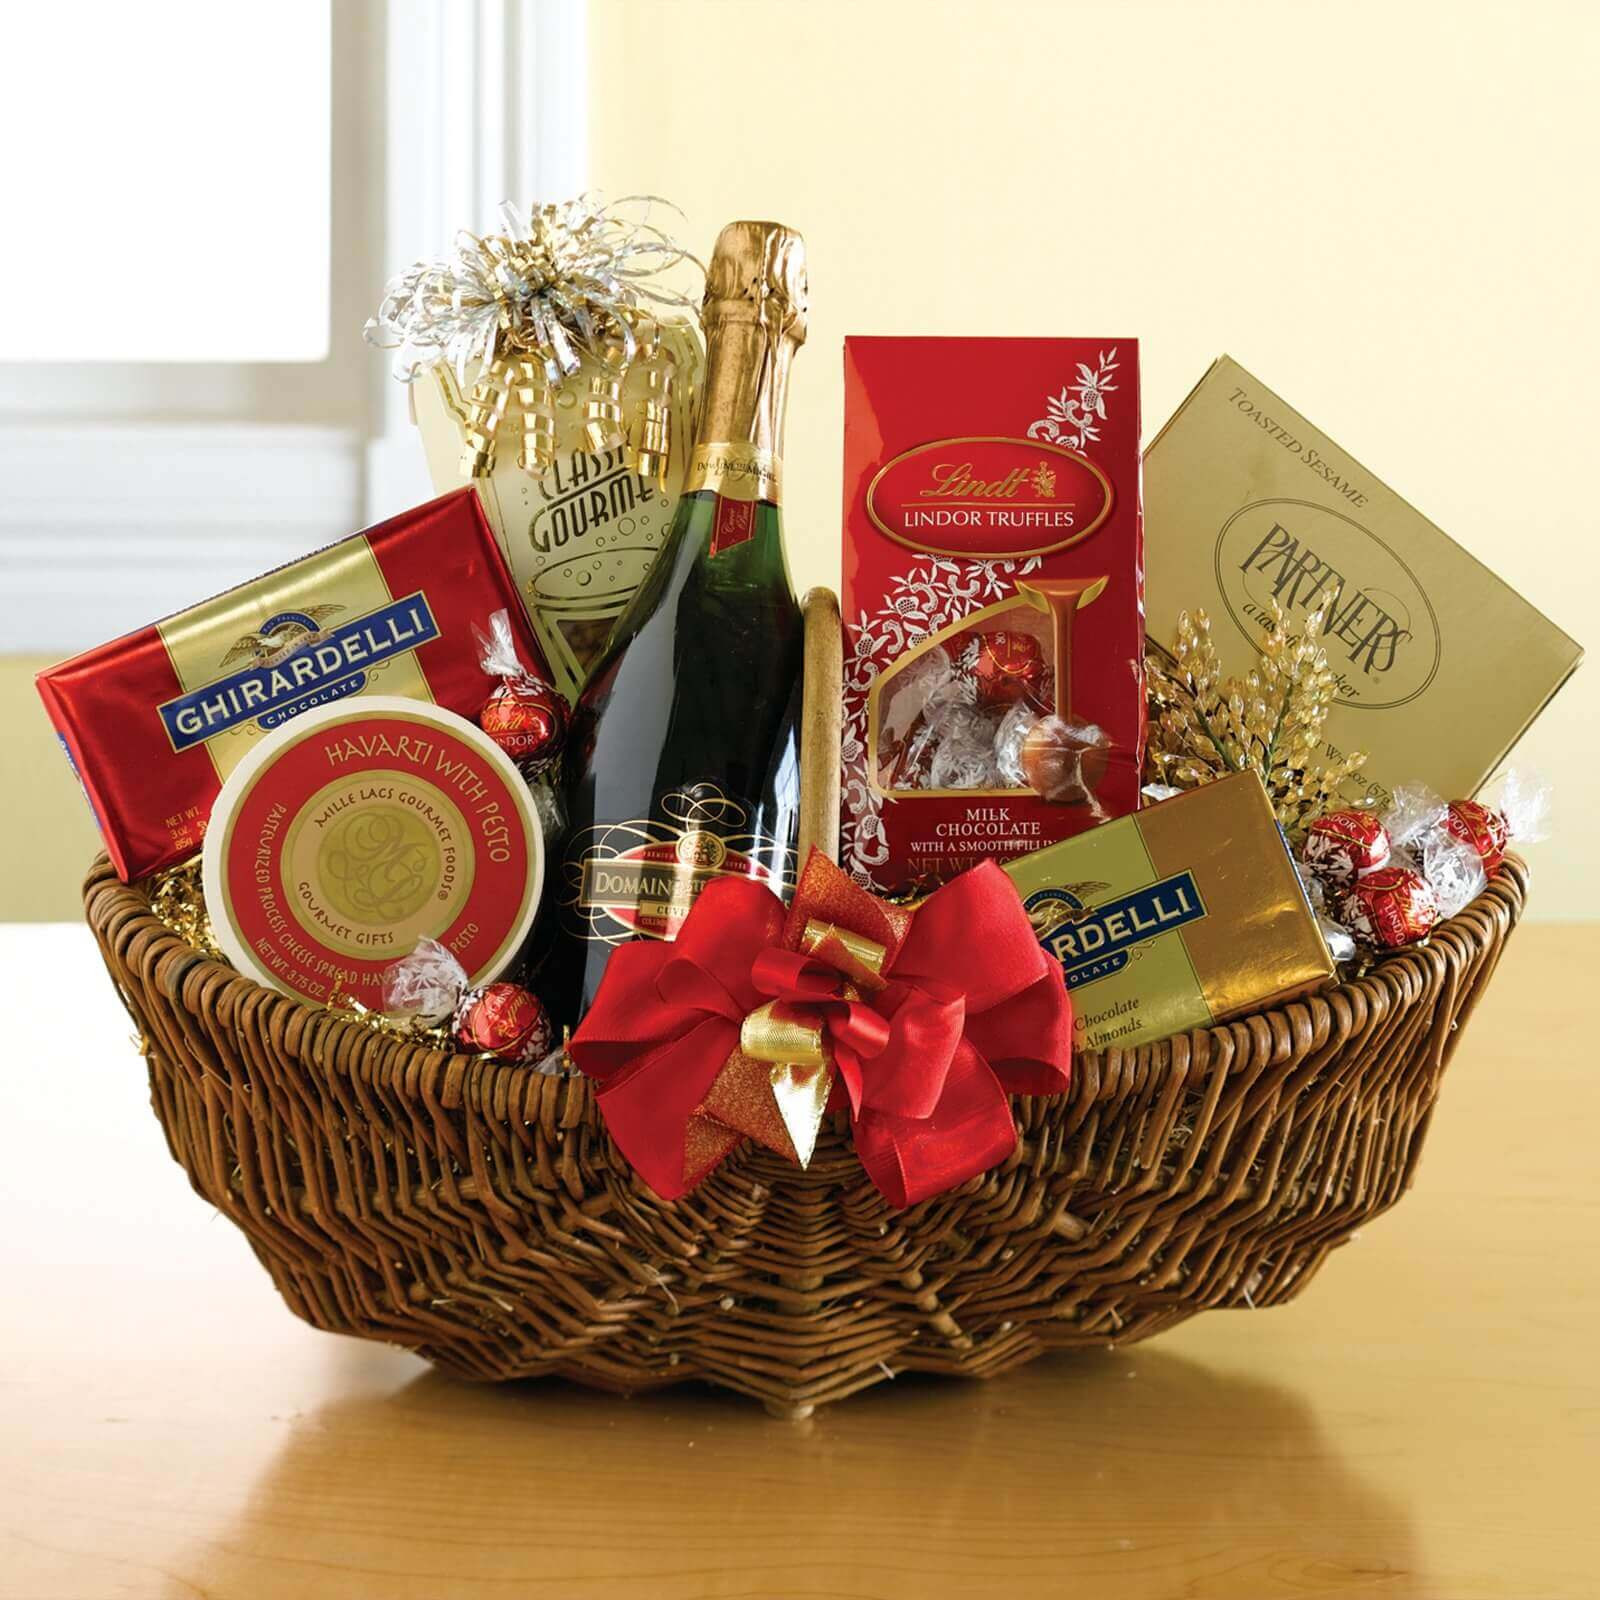 Valentine Day Gift Box Ideas
 Best Valentine s Day Gift Baskets Boxes & Gift Sets Ideas